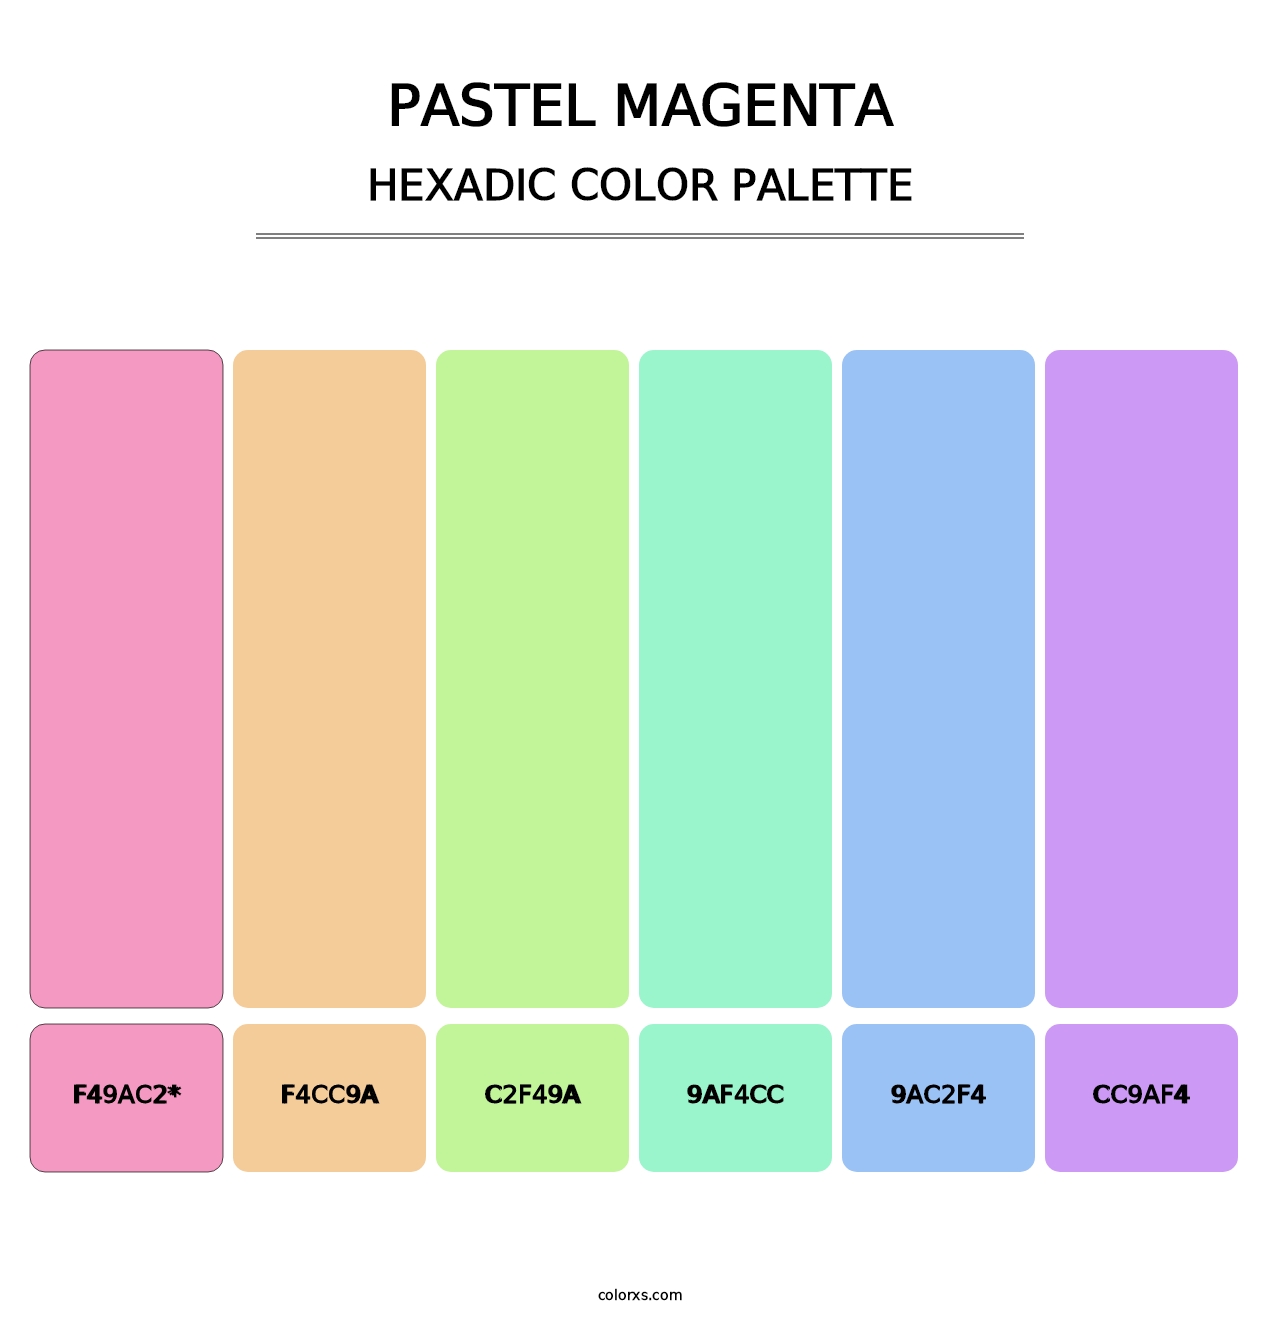 Pastel Magenta - Hexadic Color Palette